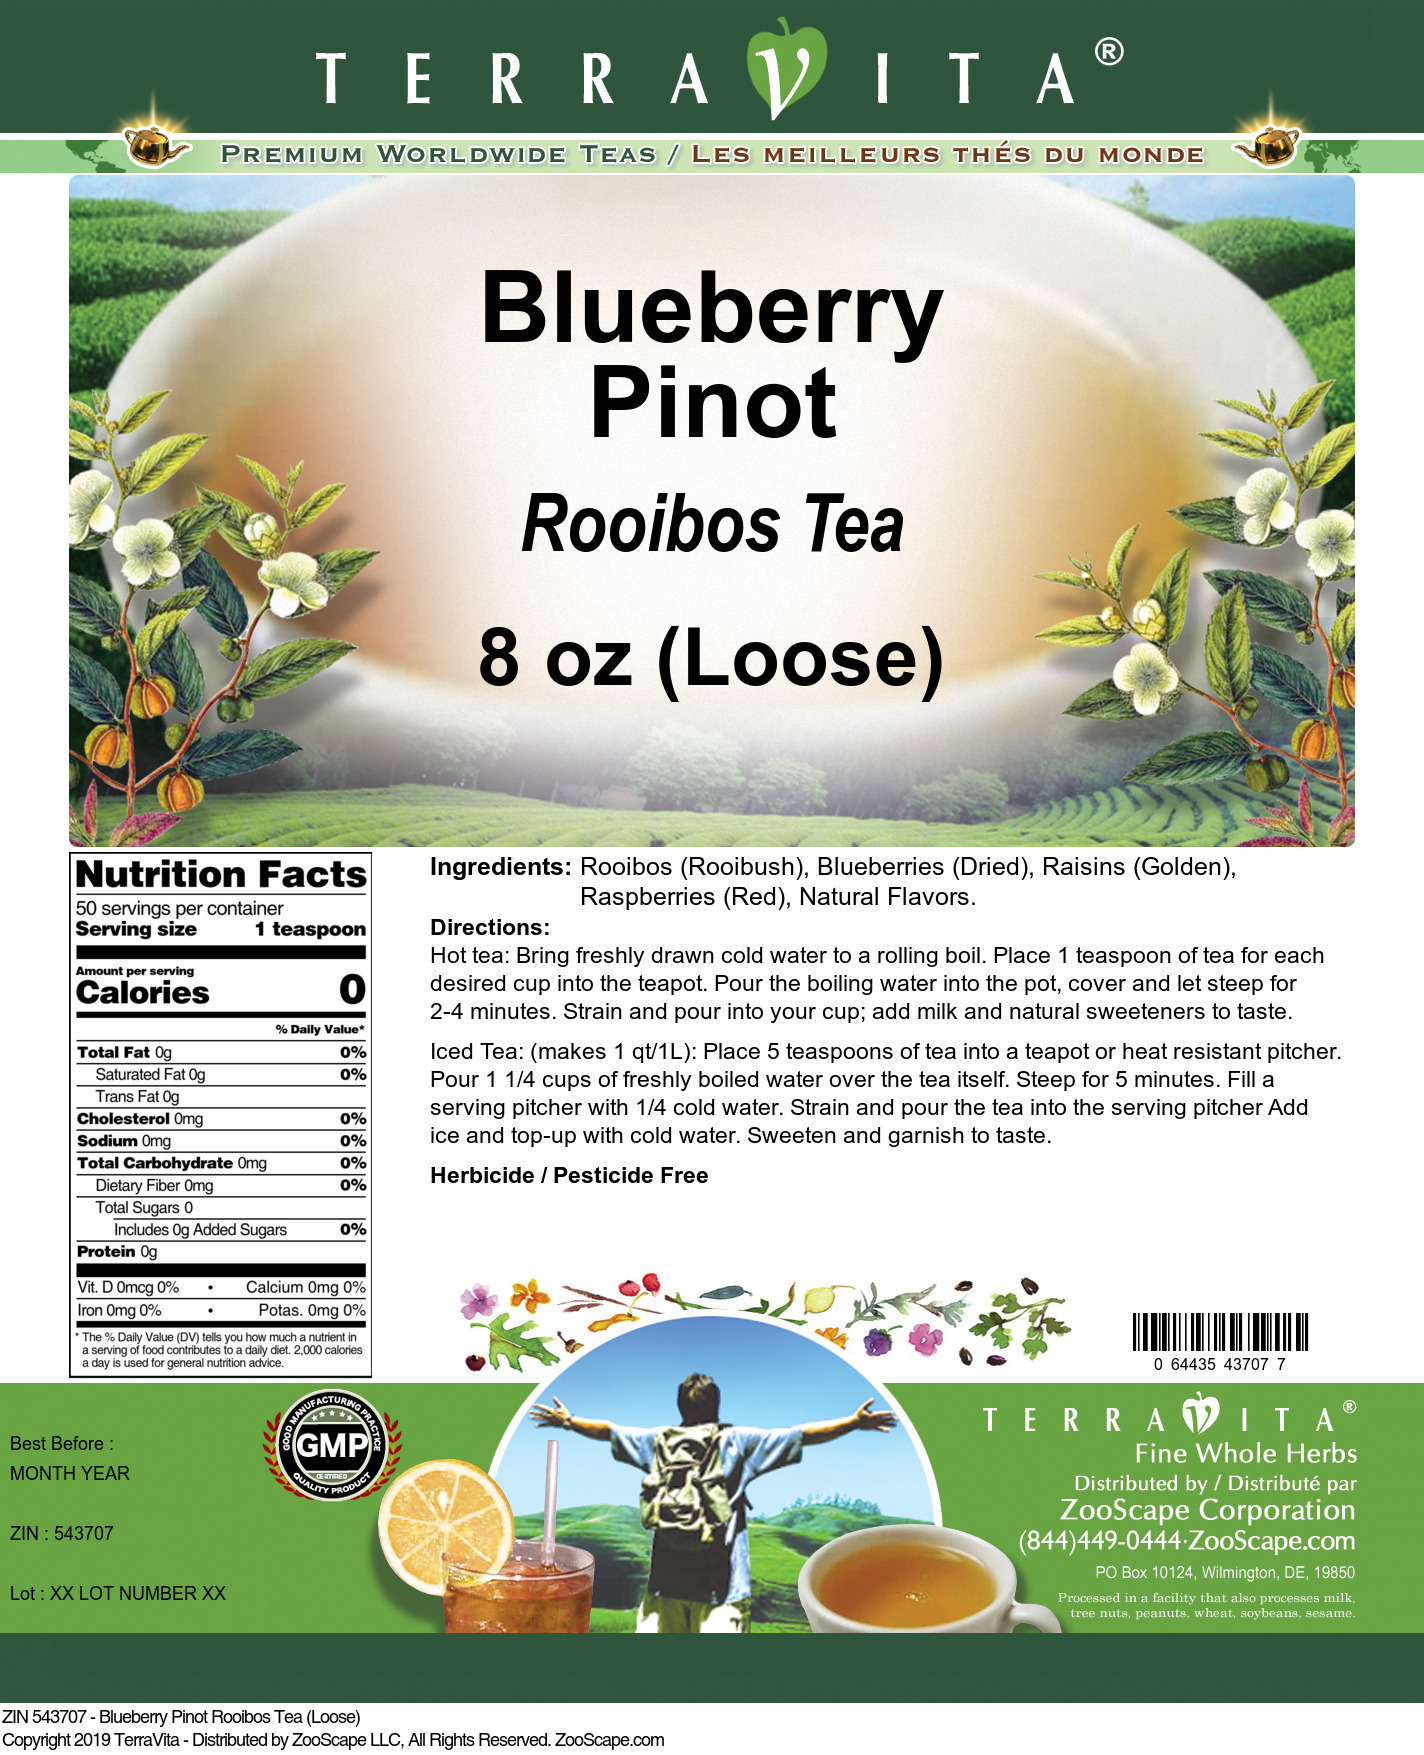 Blueberry Pinot Rooibos Tea (Loose) - Label